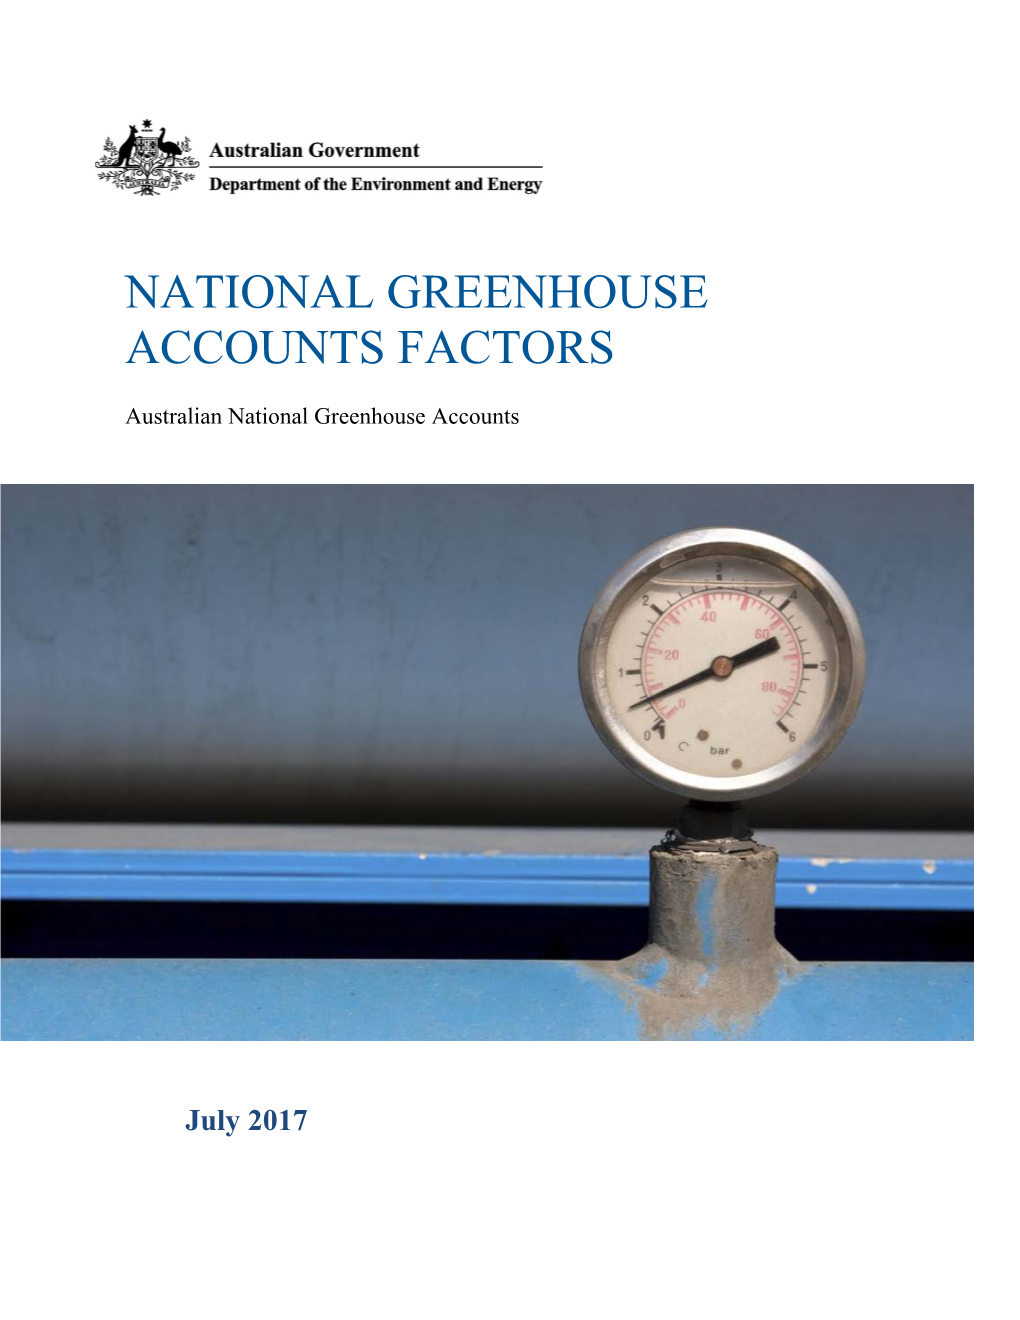 National Greenhouse Accounts Factors July 2017